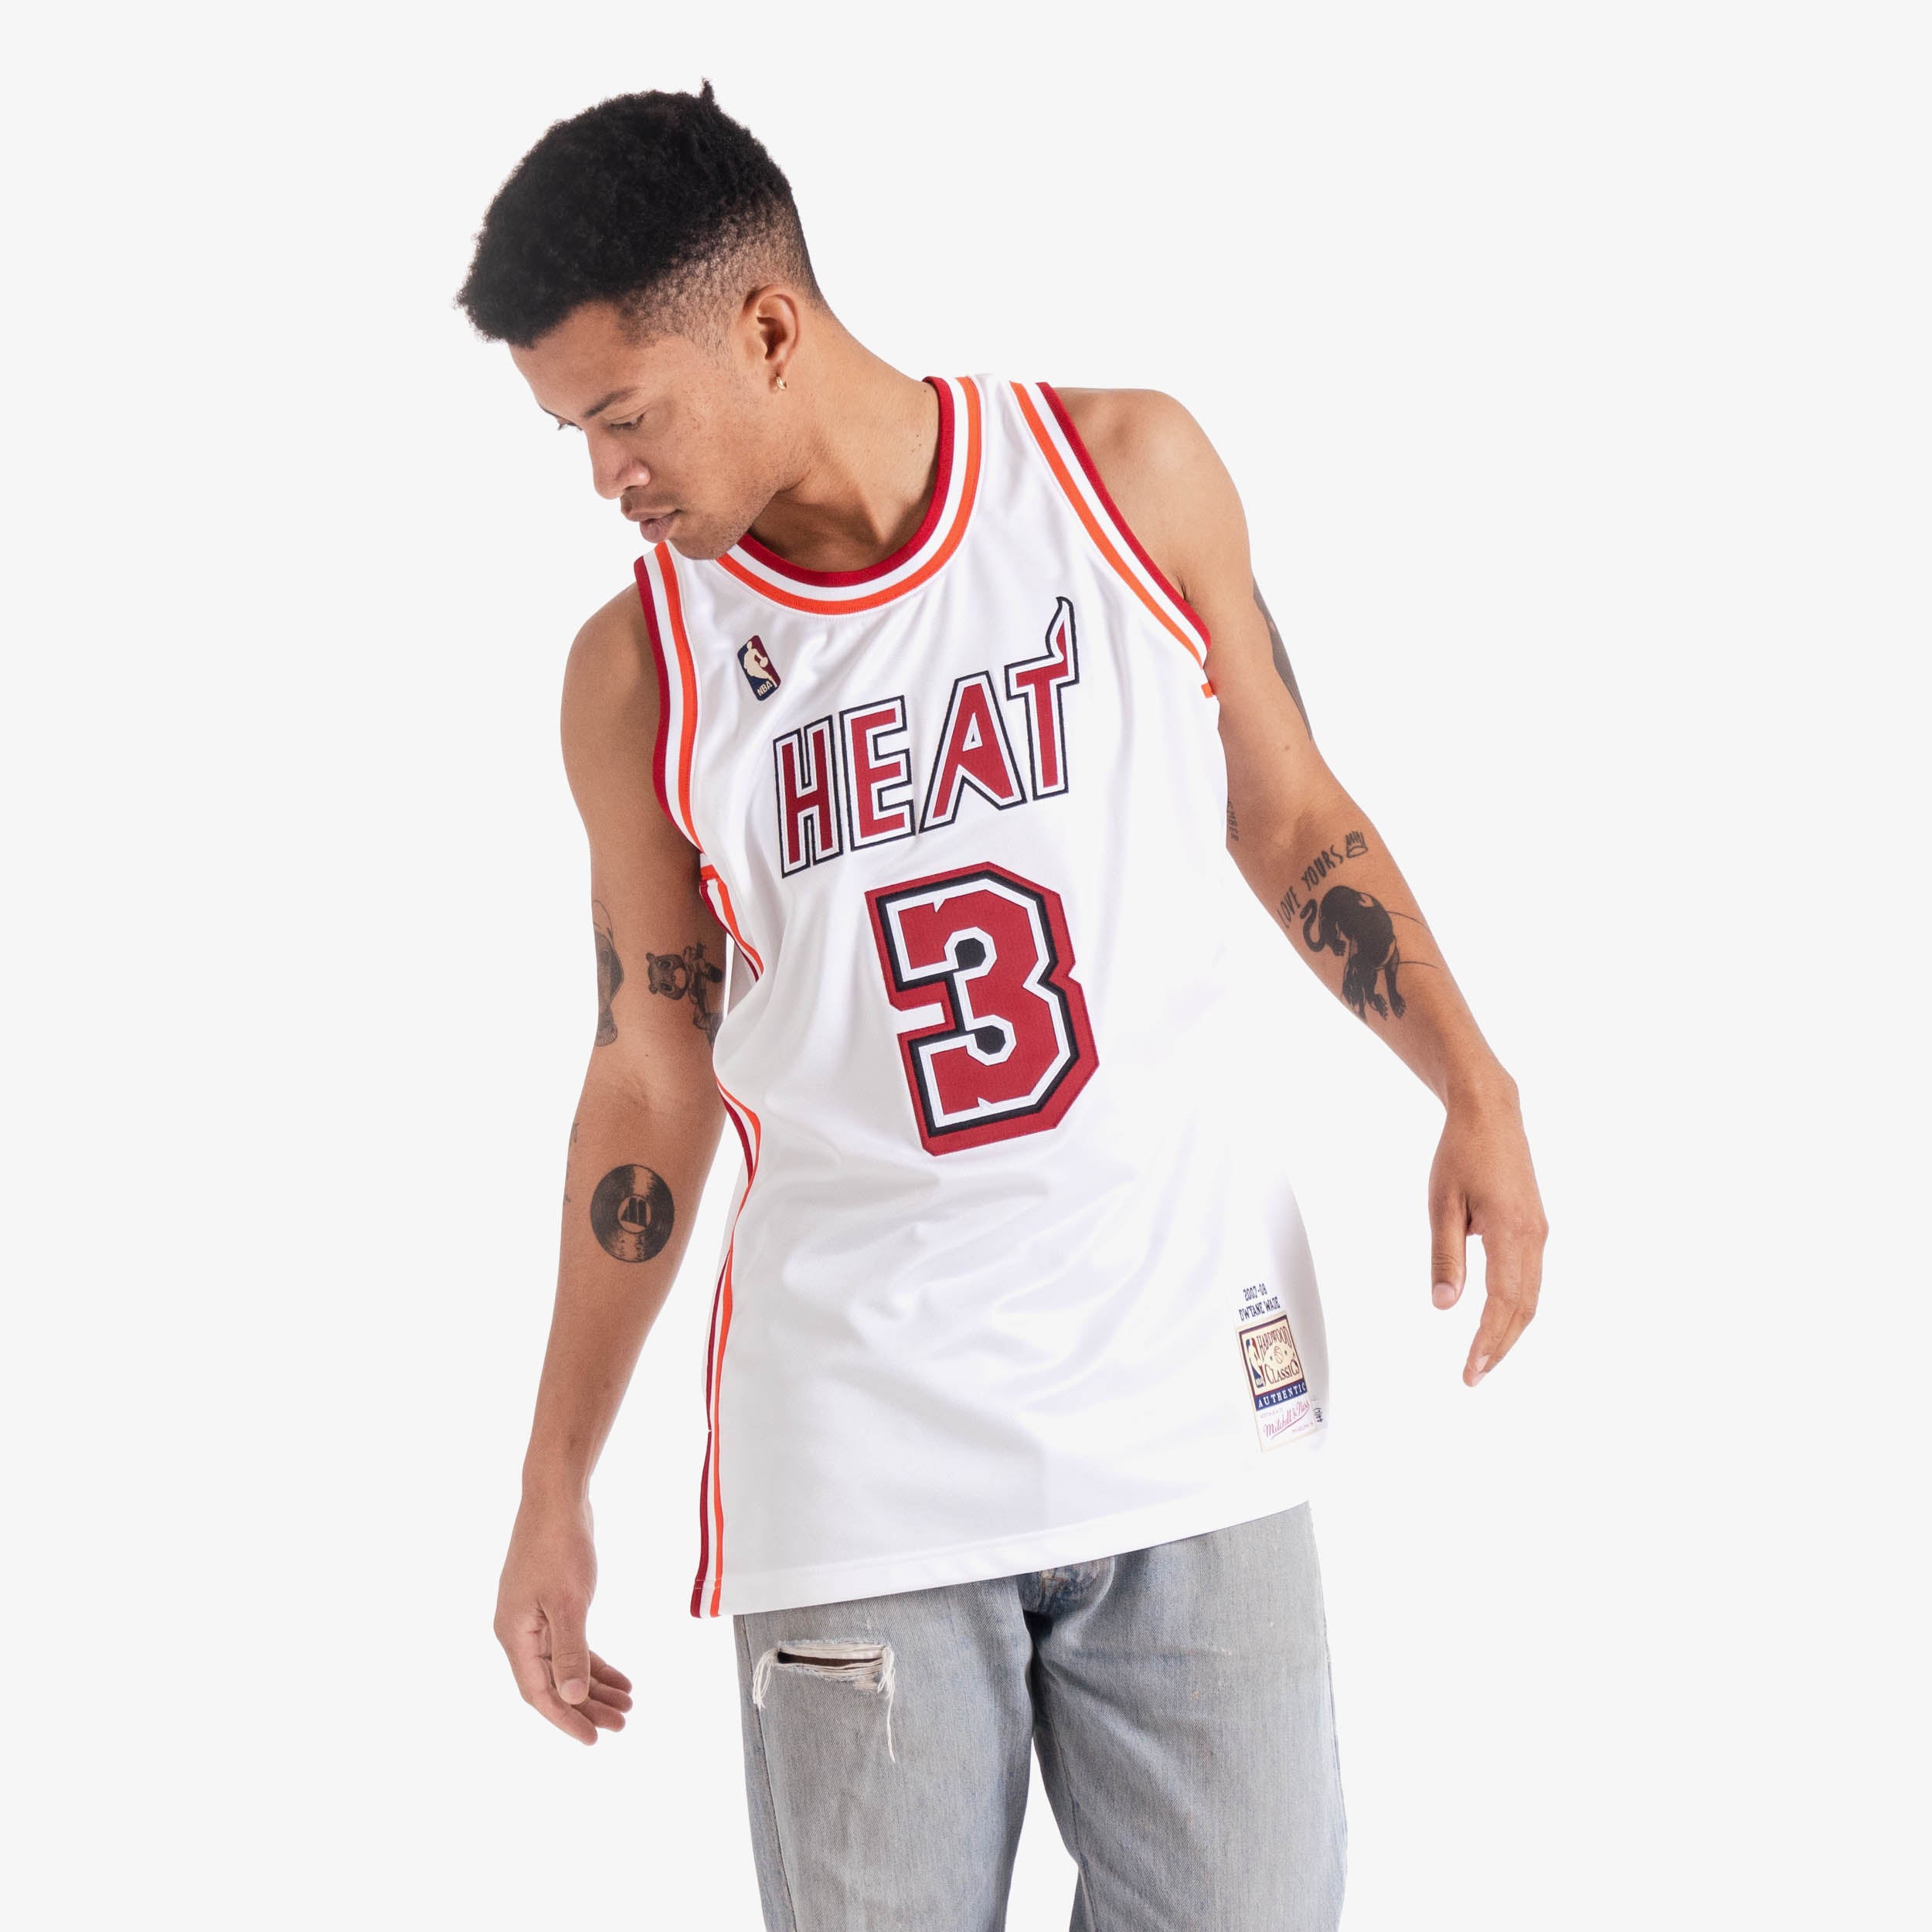 Miami Heat Dwayne Wade #3 Adidas Mesh Basketball Jersey SEWN XL